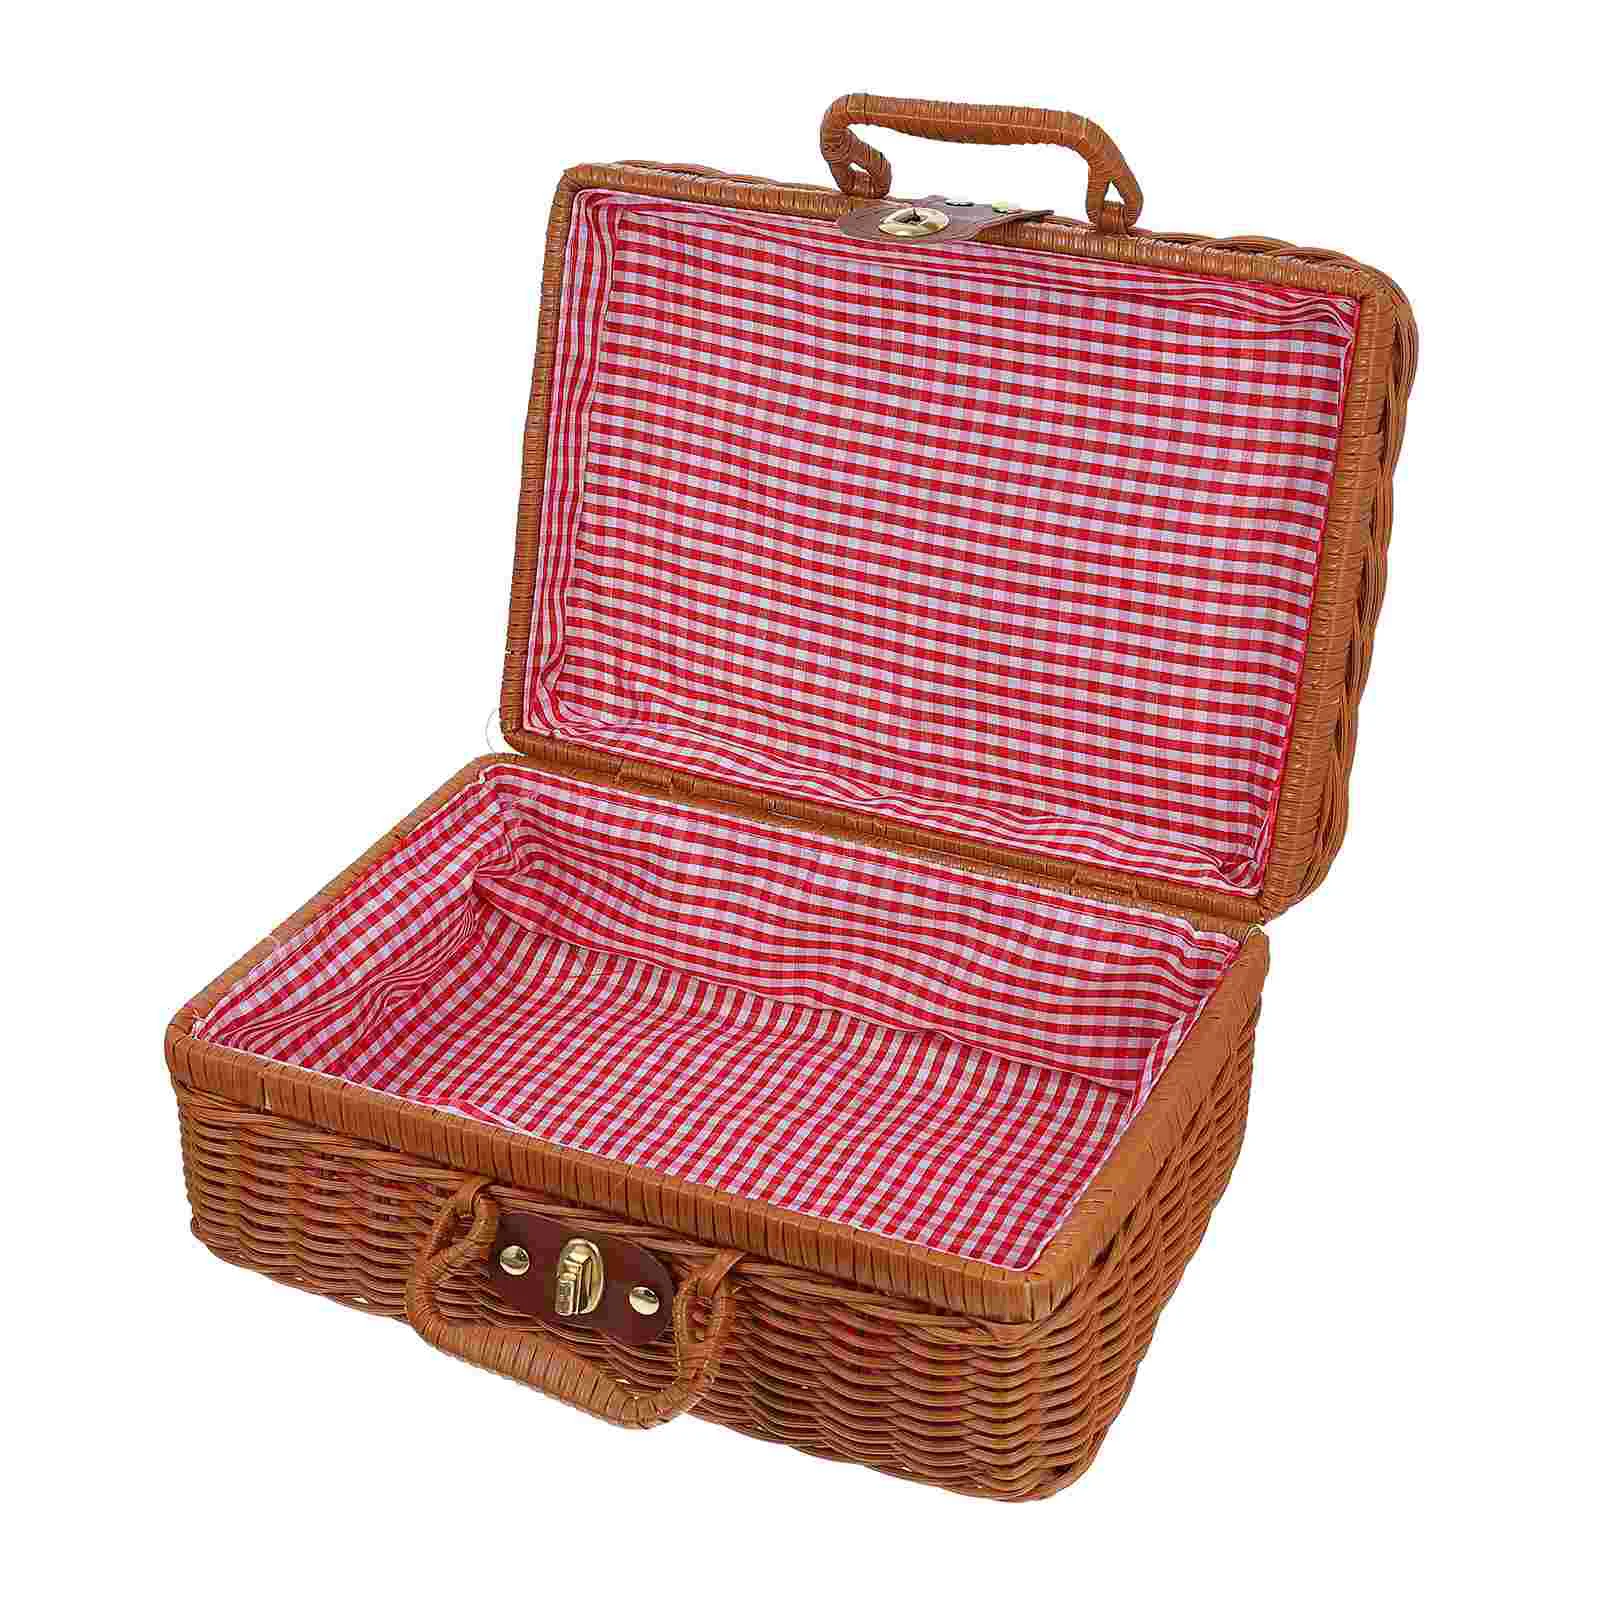 

Storage Basket Rattan Woven Box Suitcase Wicker Lid Baskets Case Handwoven Vintage Retro Lids Imitation Picnic Home Organizing